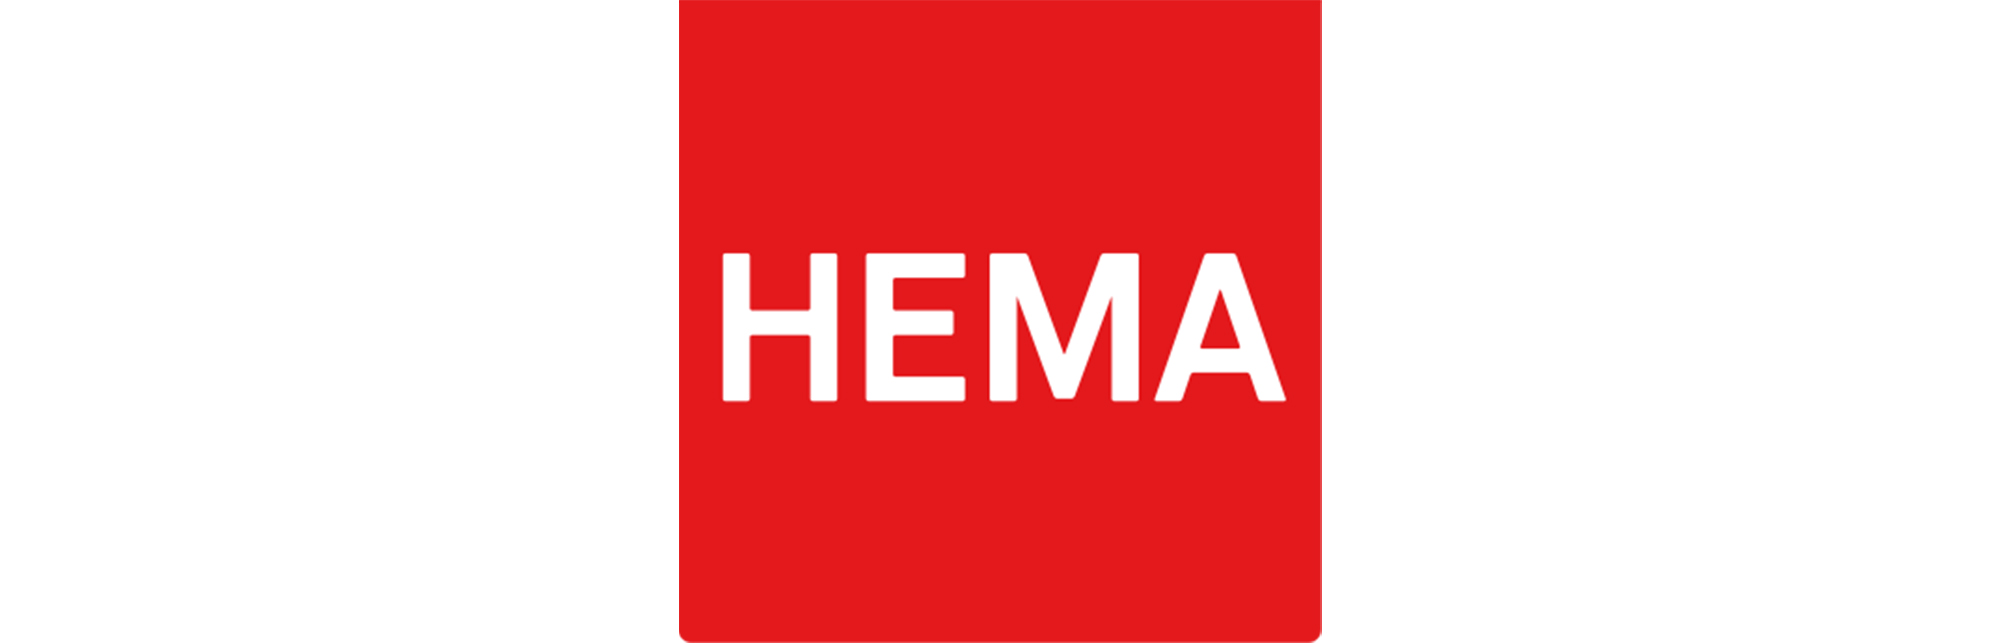 HEMA_Logo2